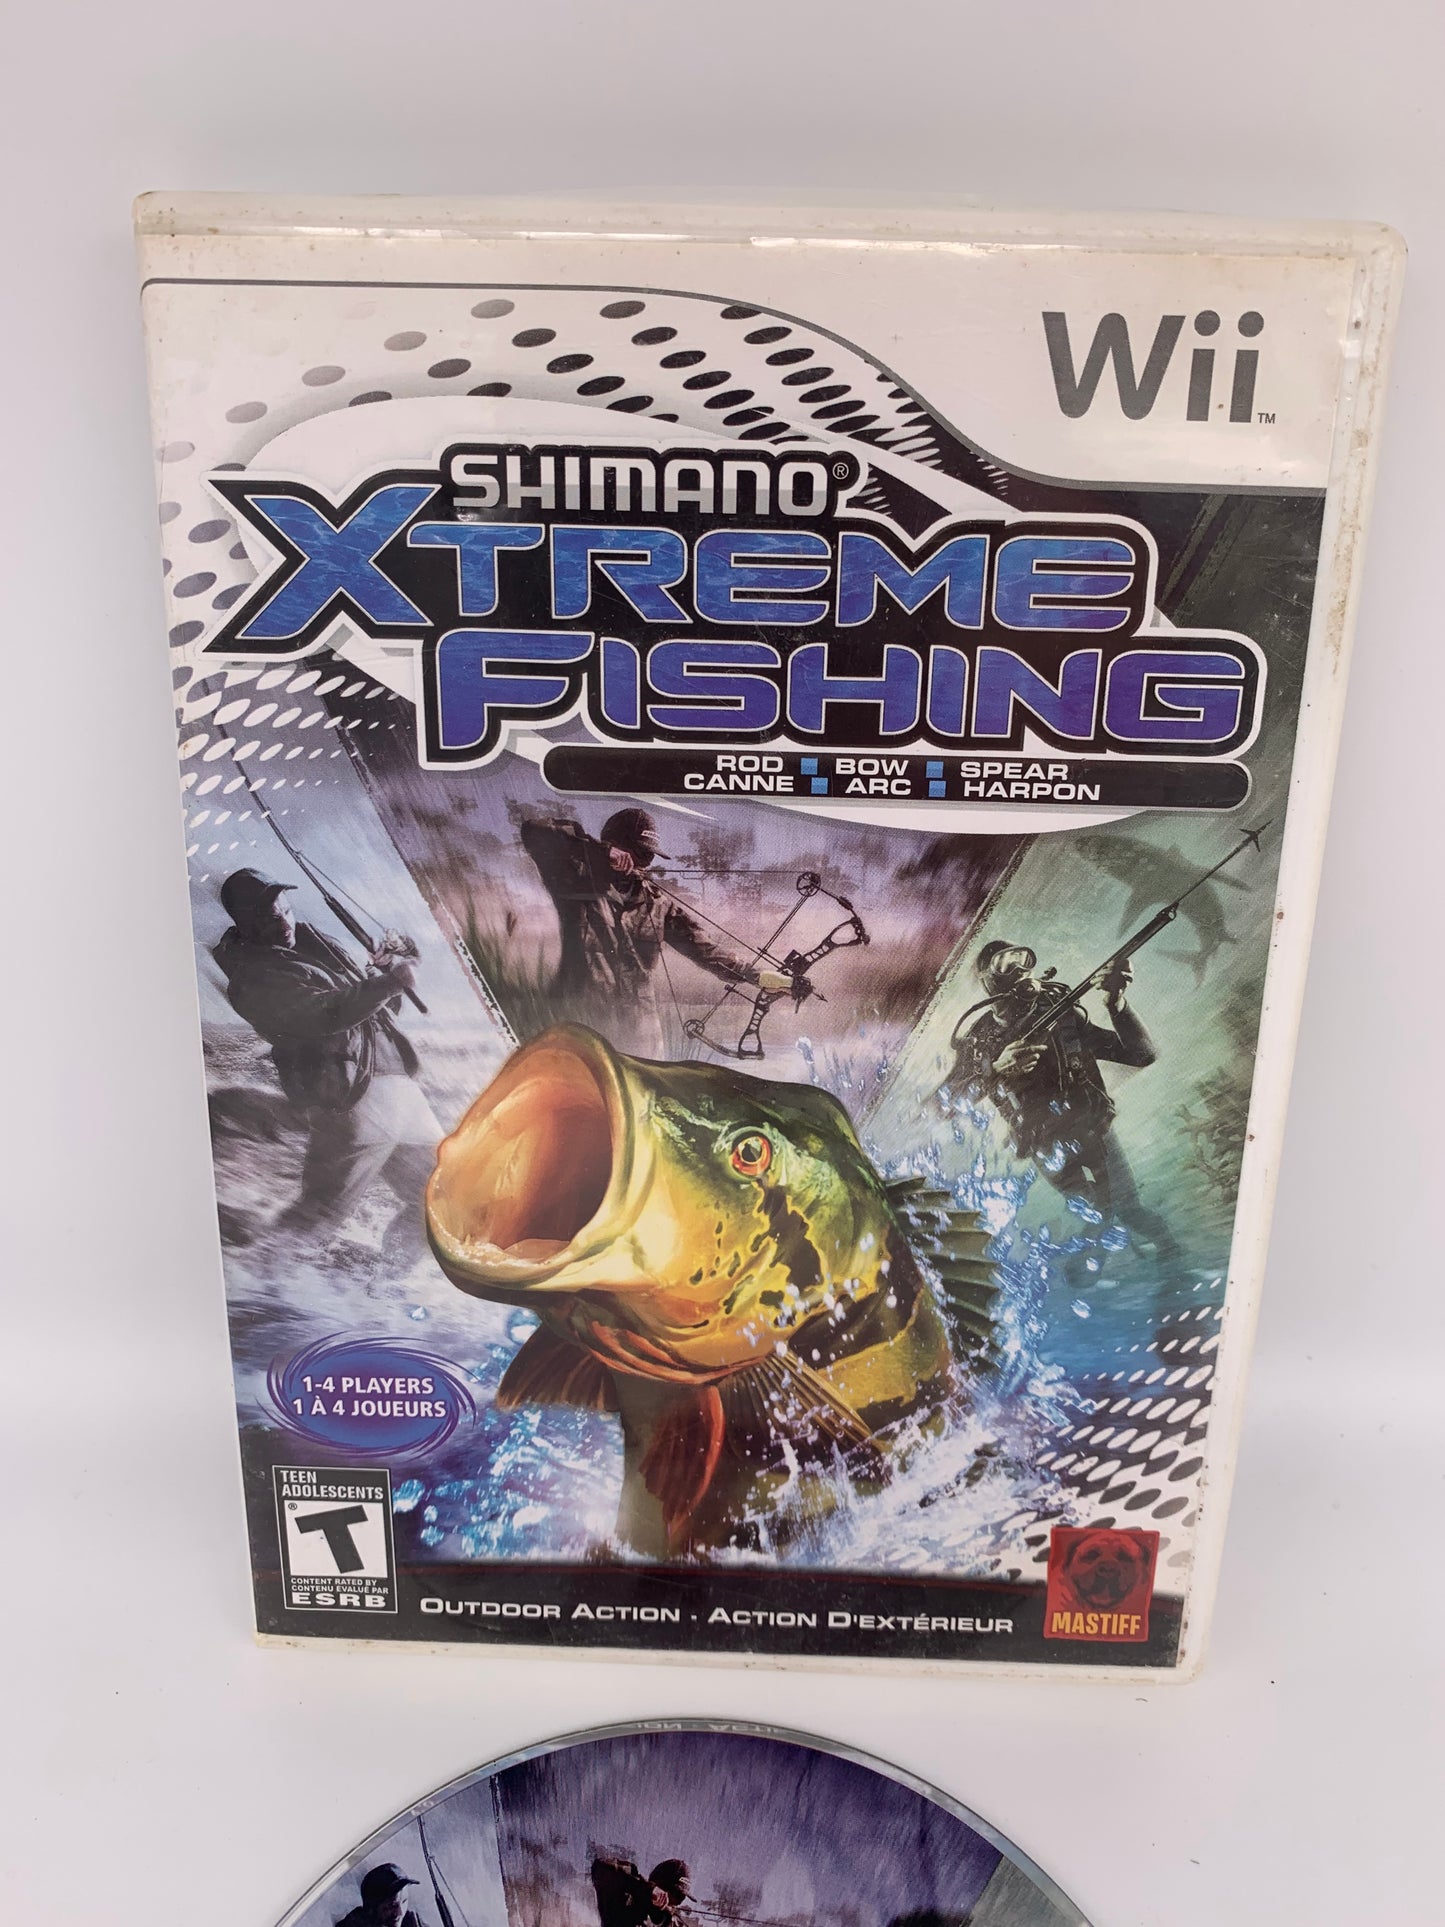 NiNTENDO Wii | SHiMANO XTREME FiSHiNG